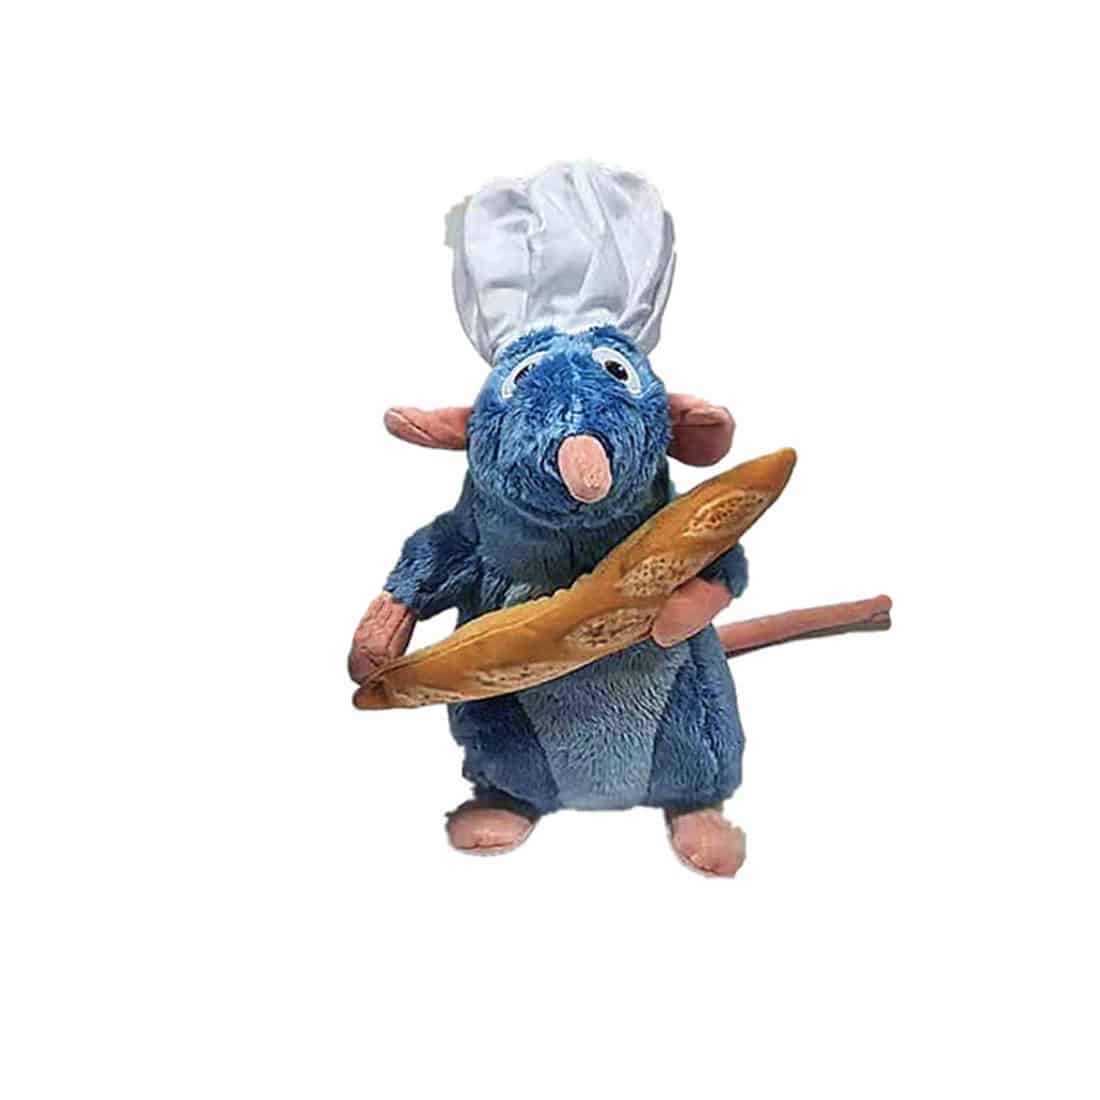 Plüschtier Ratatouille mit einem Baguette Plüschtier Ratatouille Plüschtier Disney Material: Baumwolle